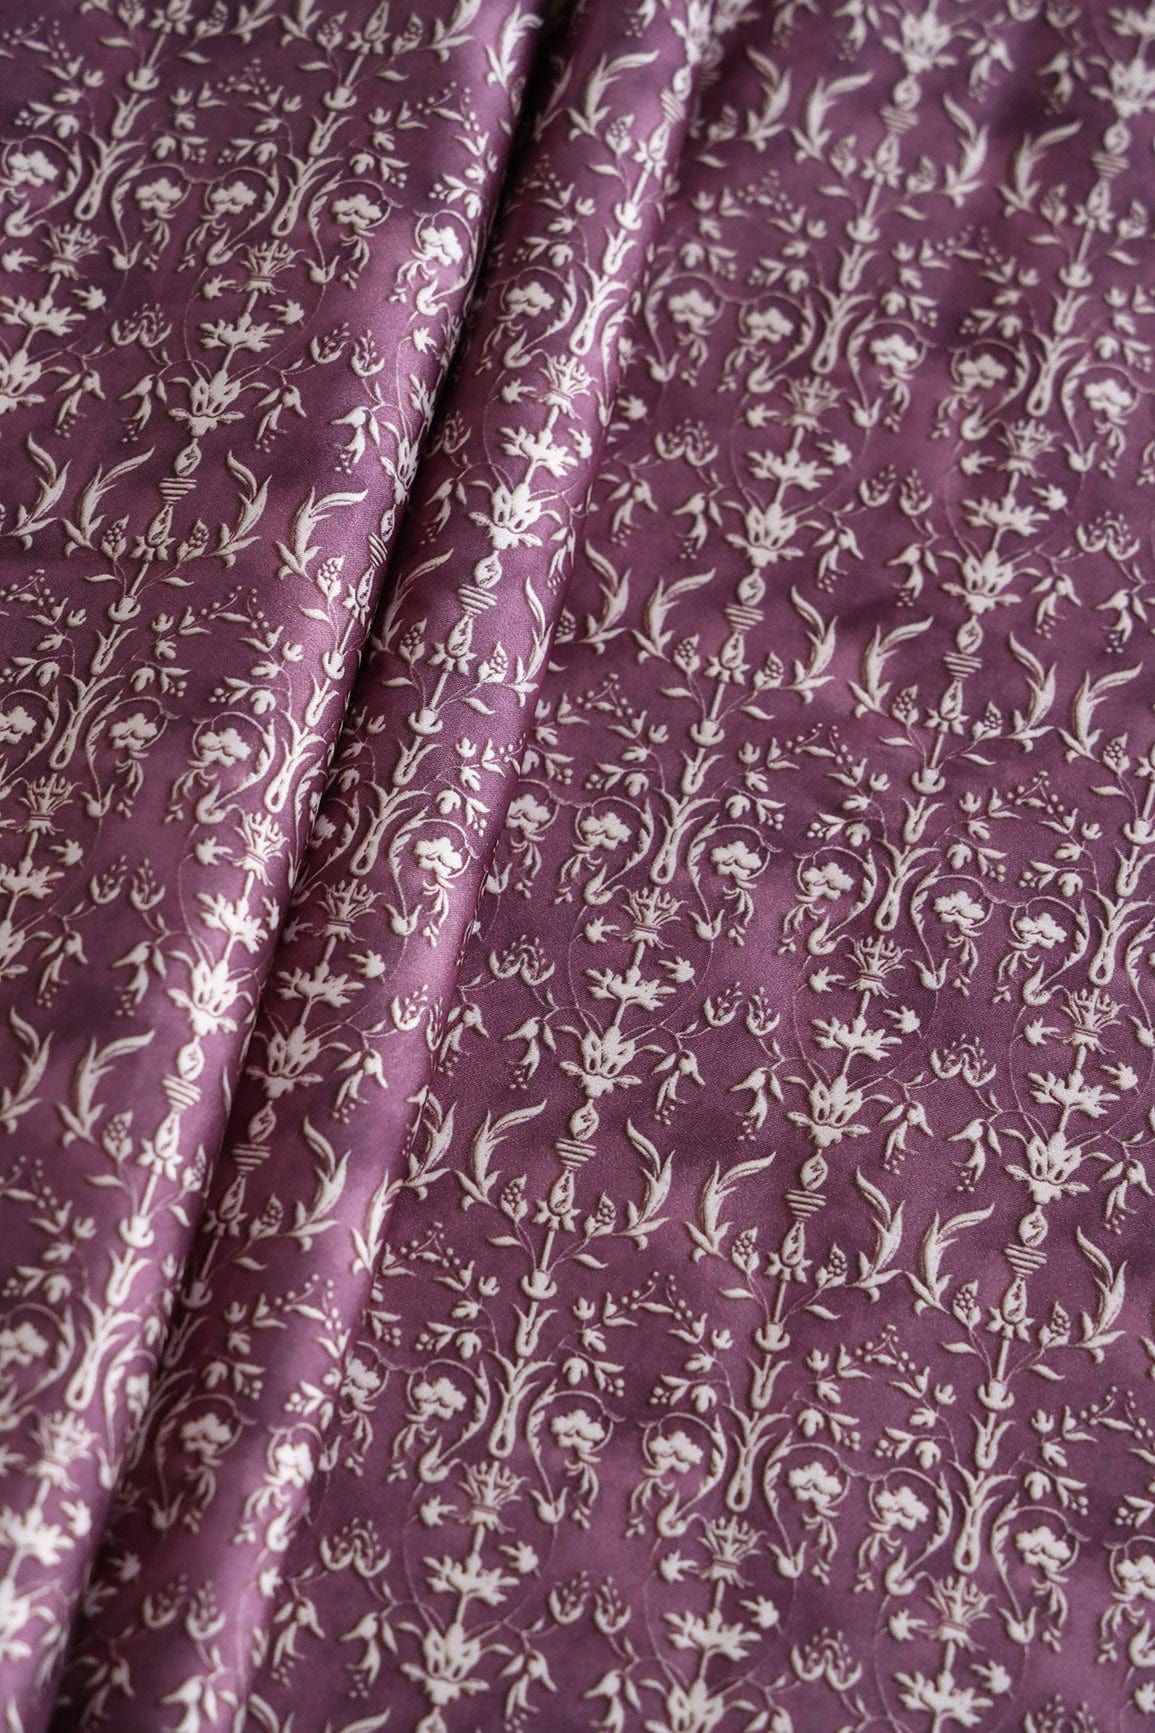 doeraa Prints Pulm Purple Ethnic Pattern Digital Print On Satin Fabric